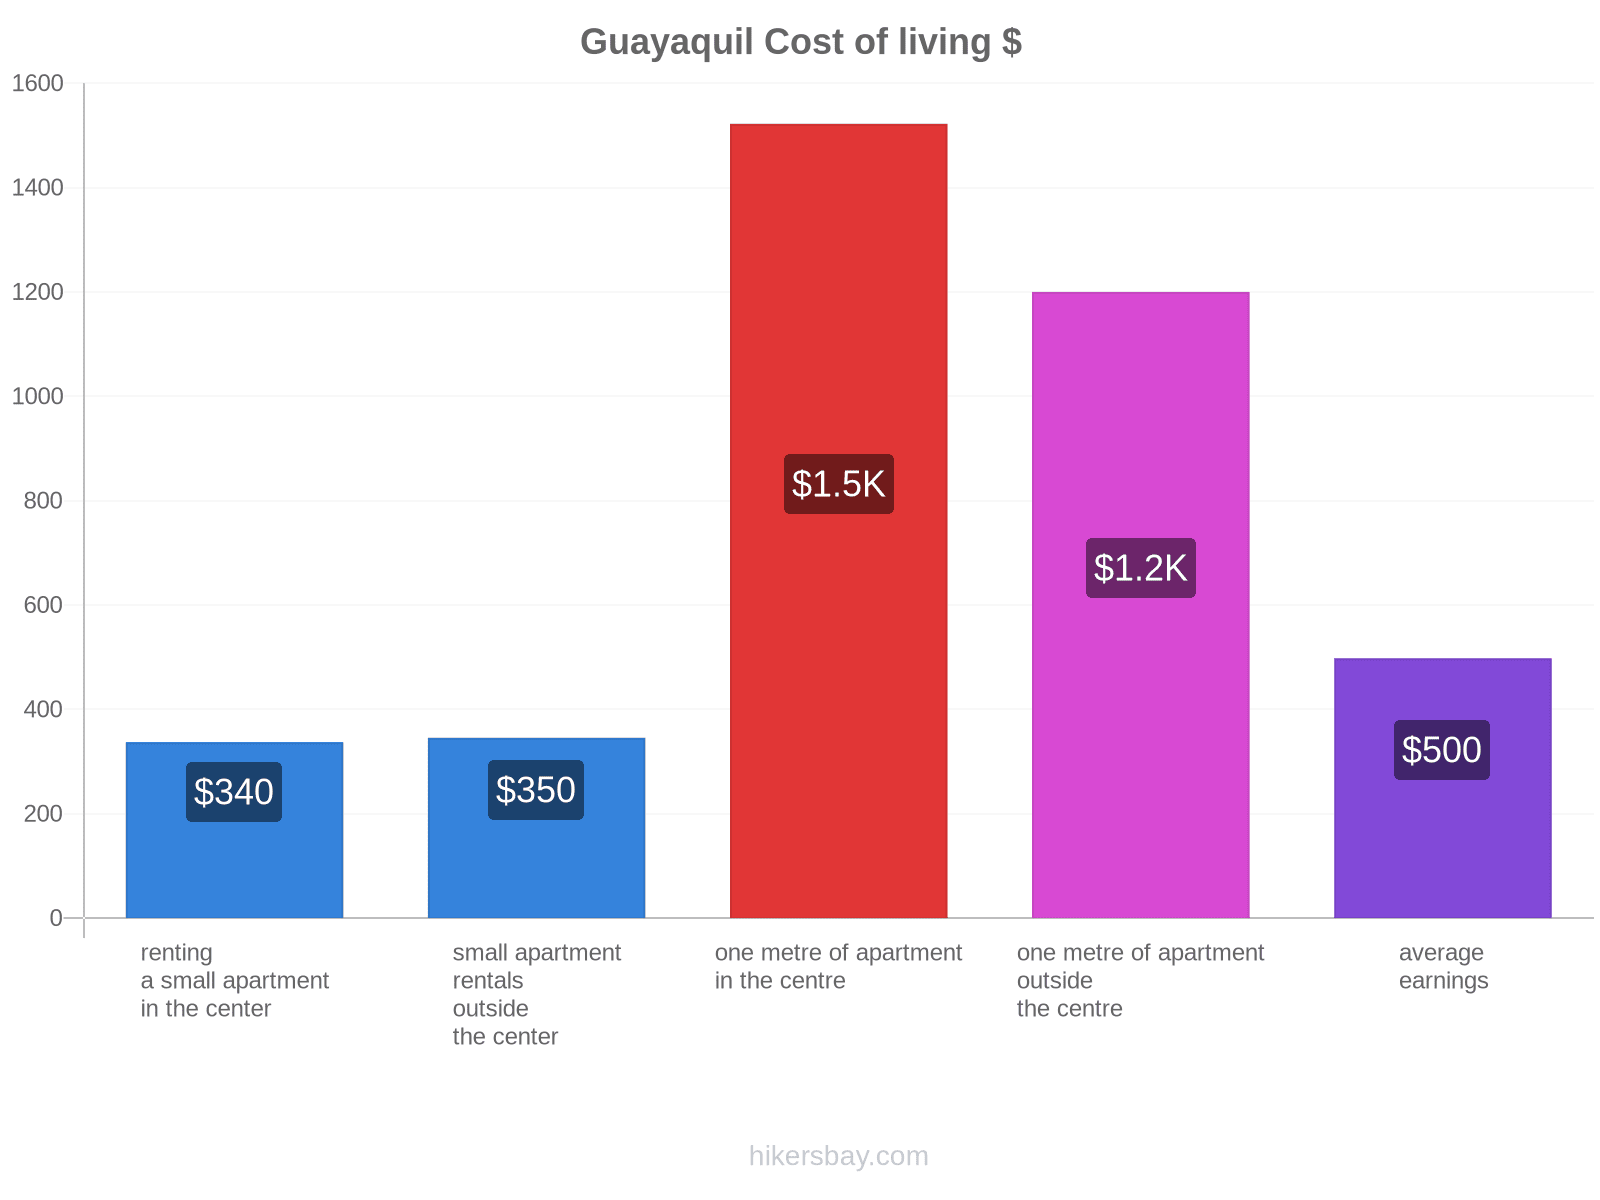 Guayaquil cost of living hikersbay.com